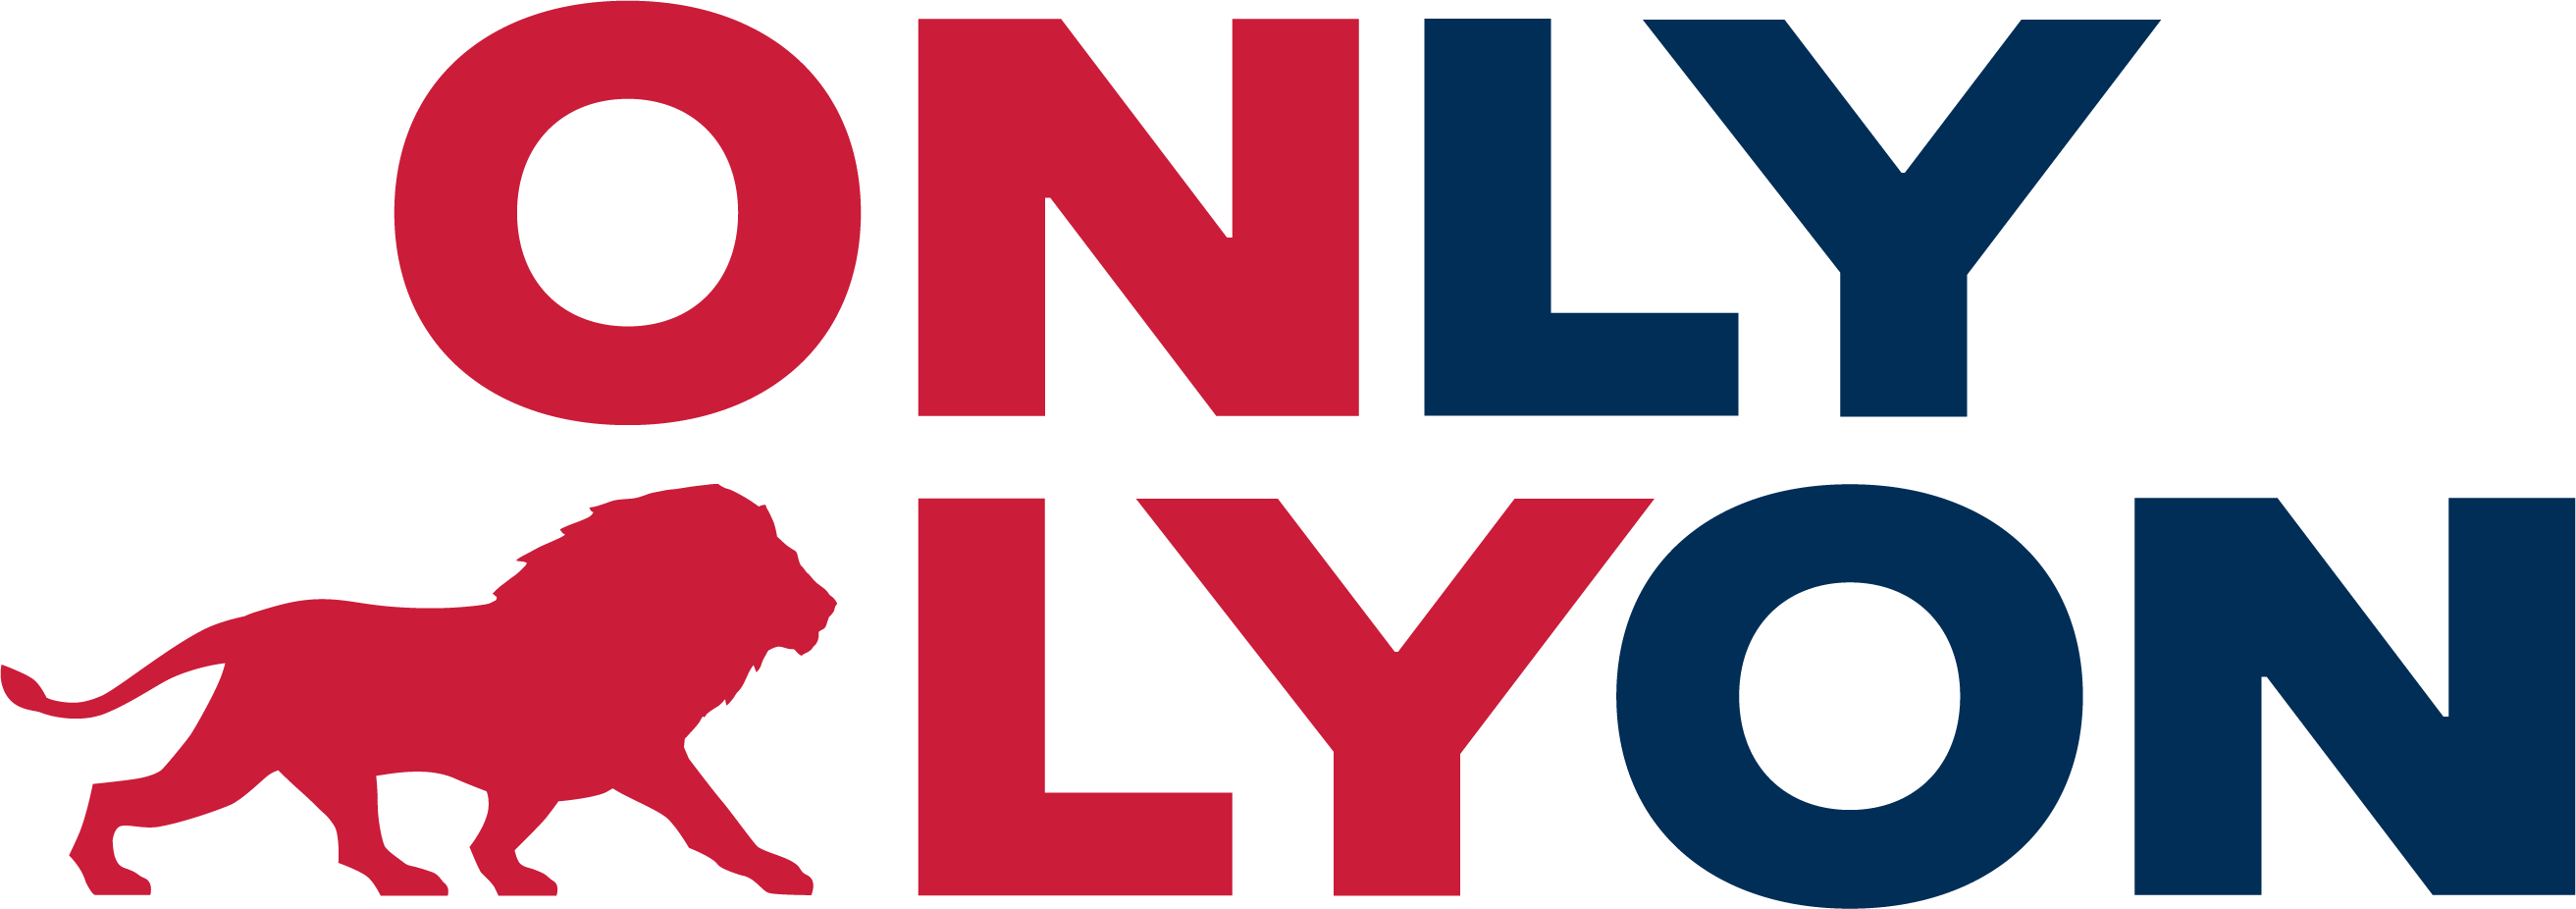 logo onlylyon